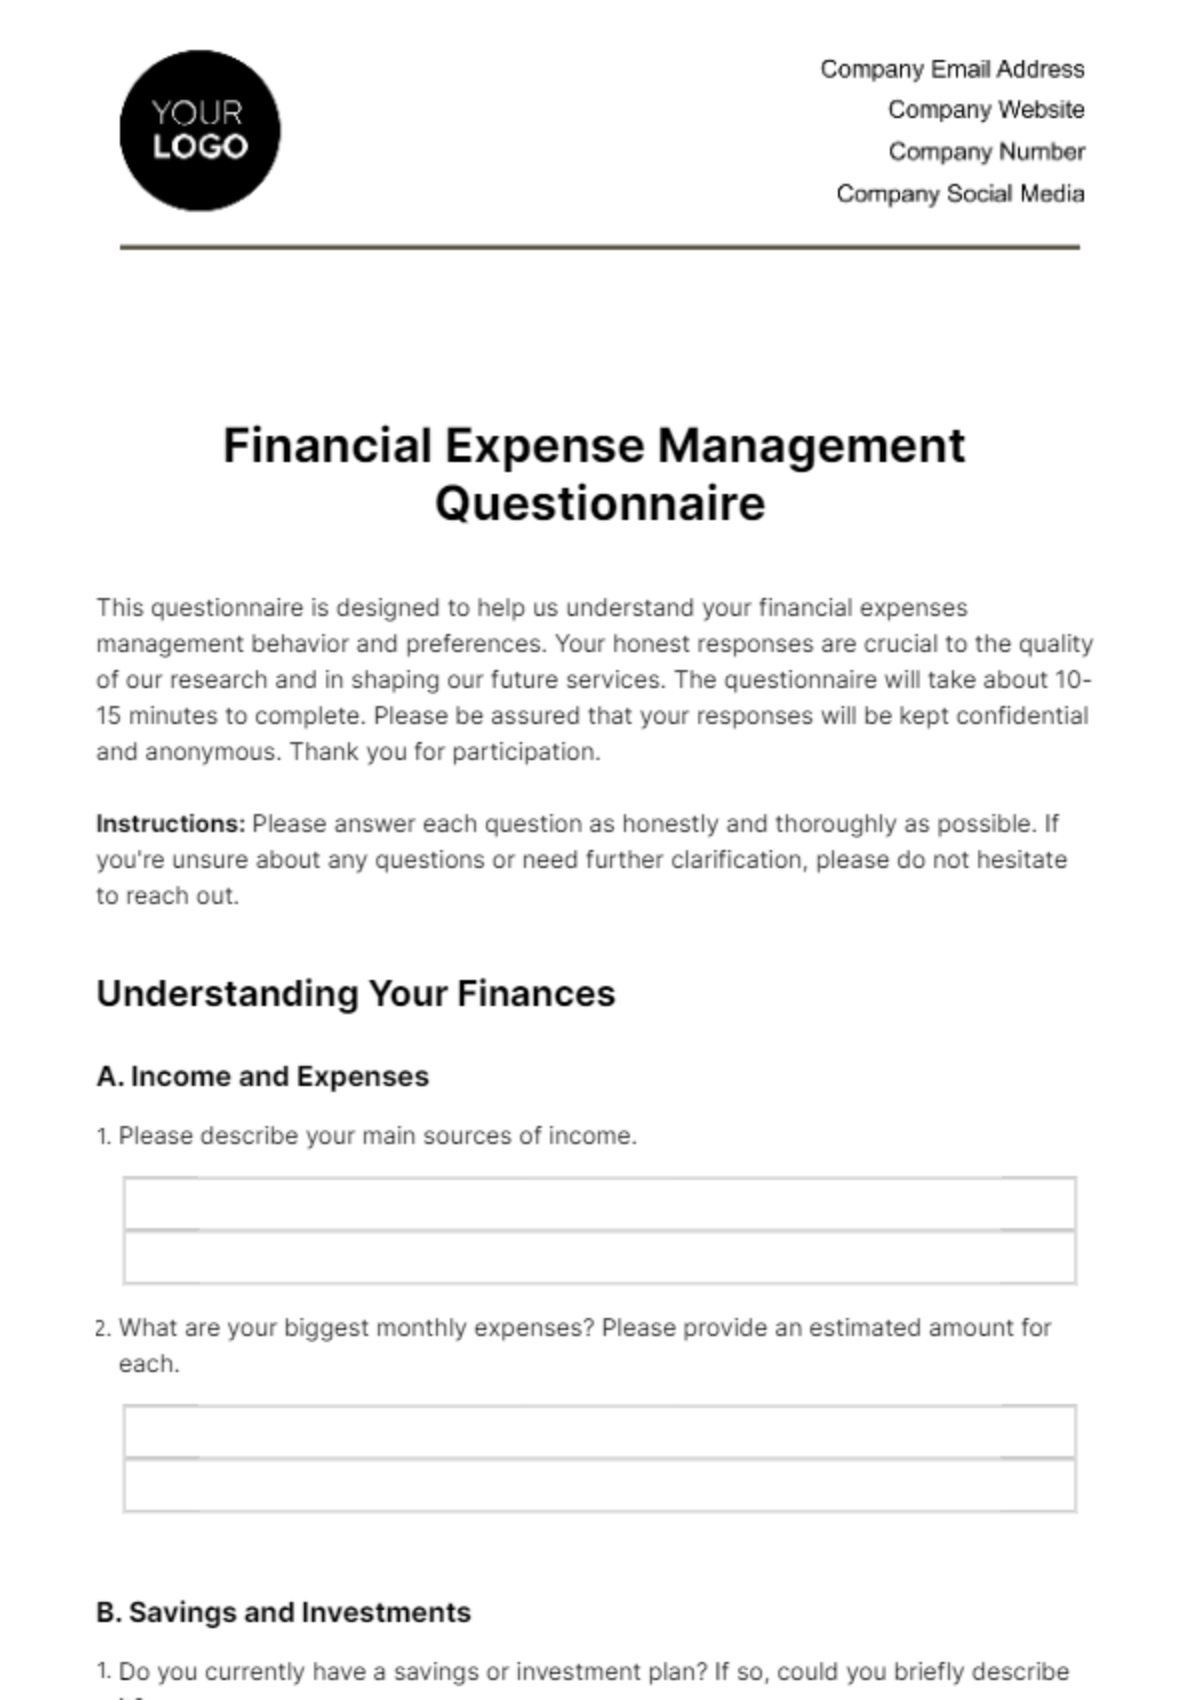 Free Financial Expense Management Questionnaire Template